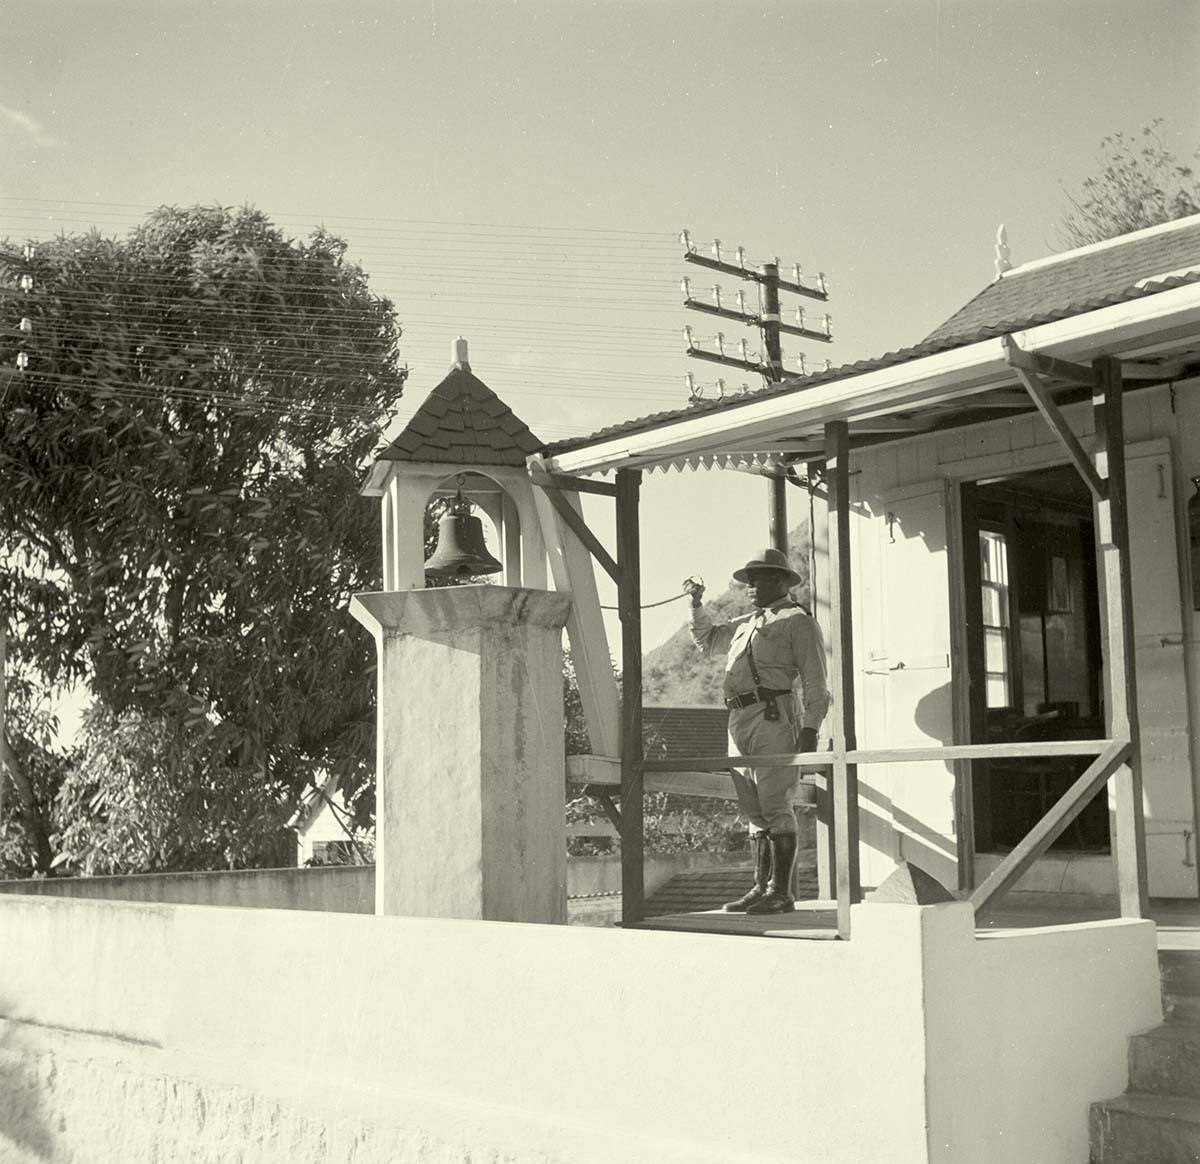 The Bottom. Police station, 1947